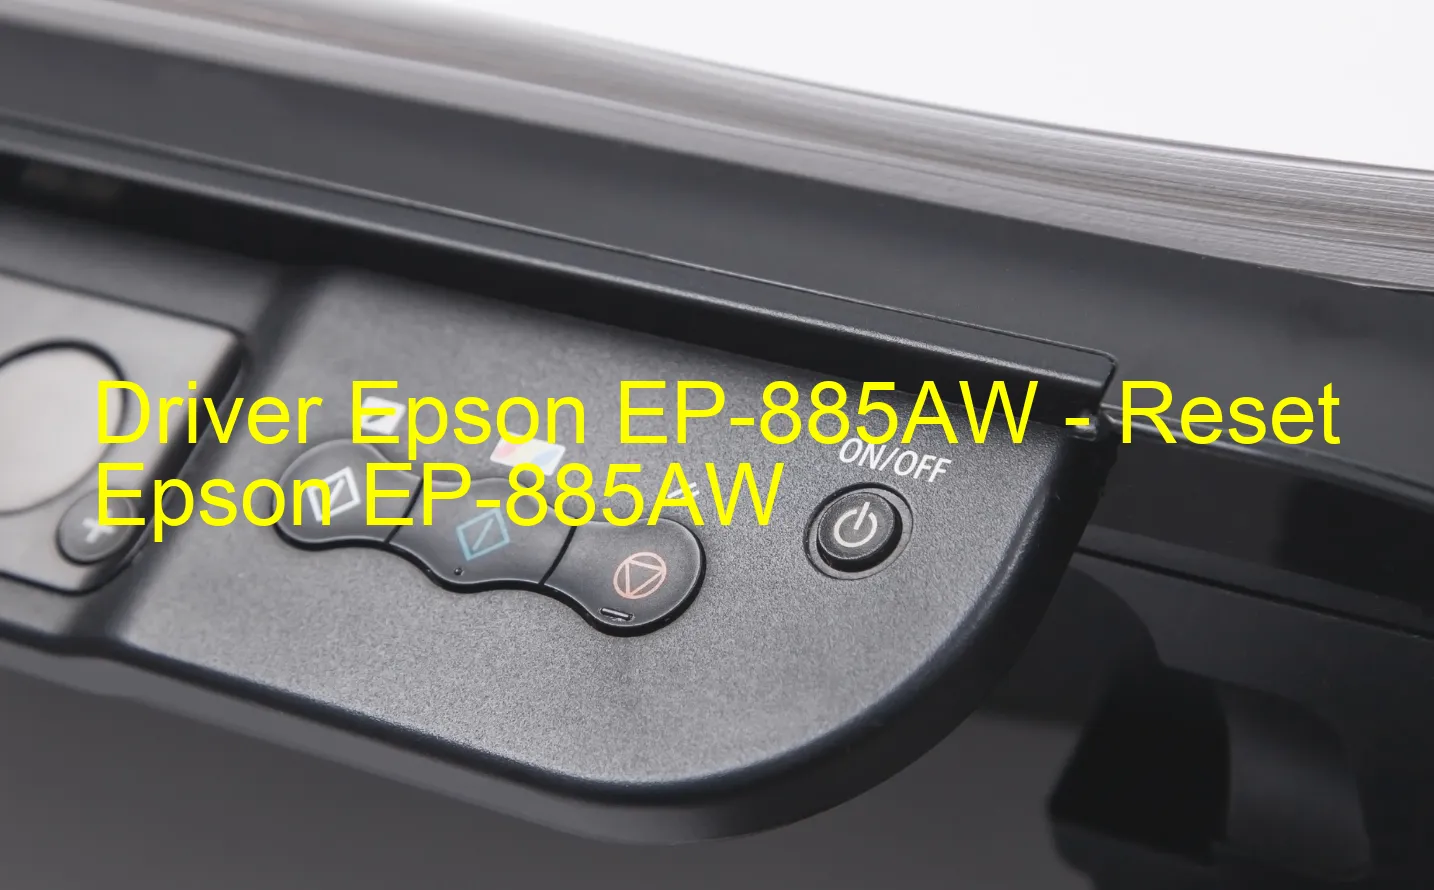 Epson EP-885AWのドライバー、Epson EP-885AWのリセットソフトウェア